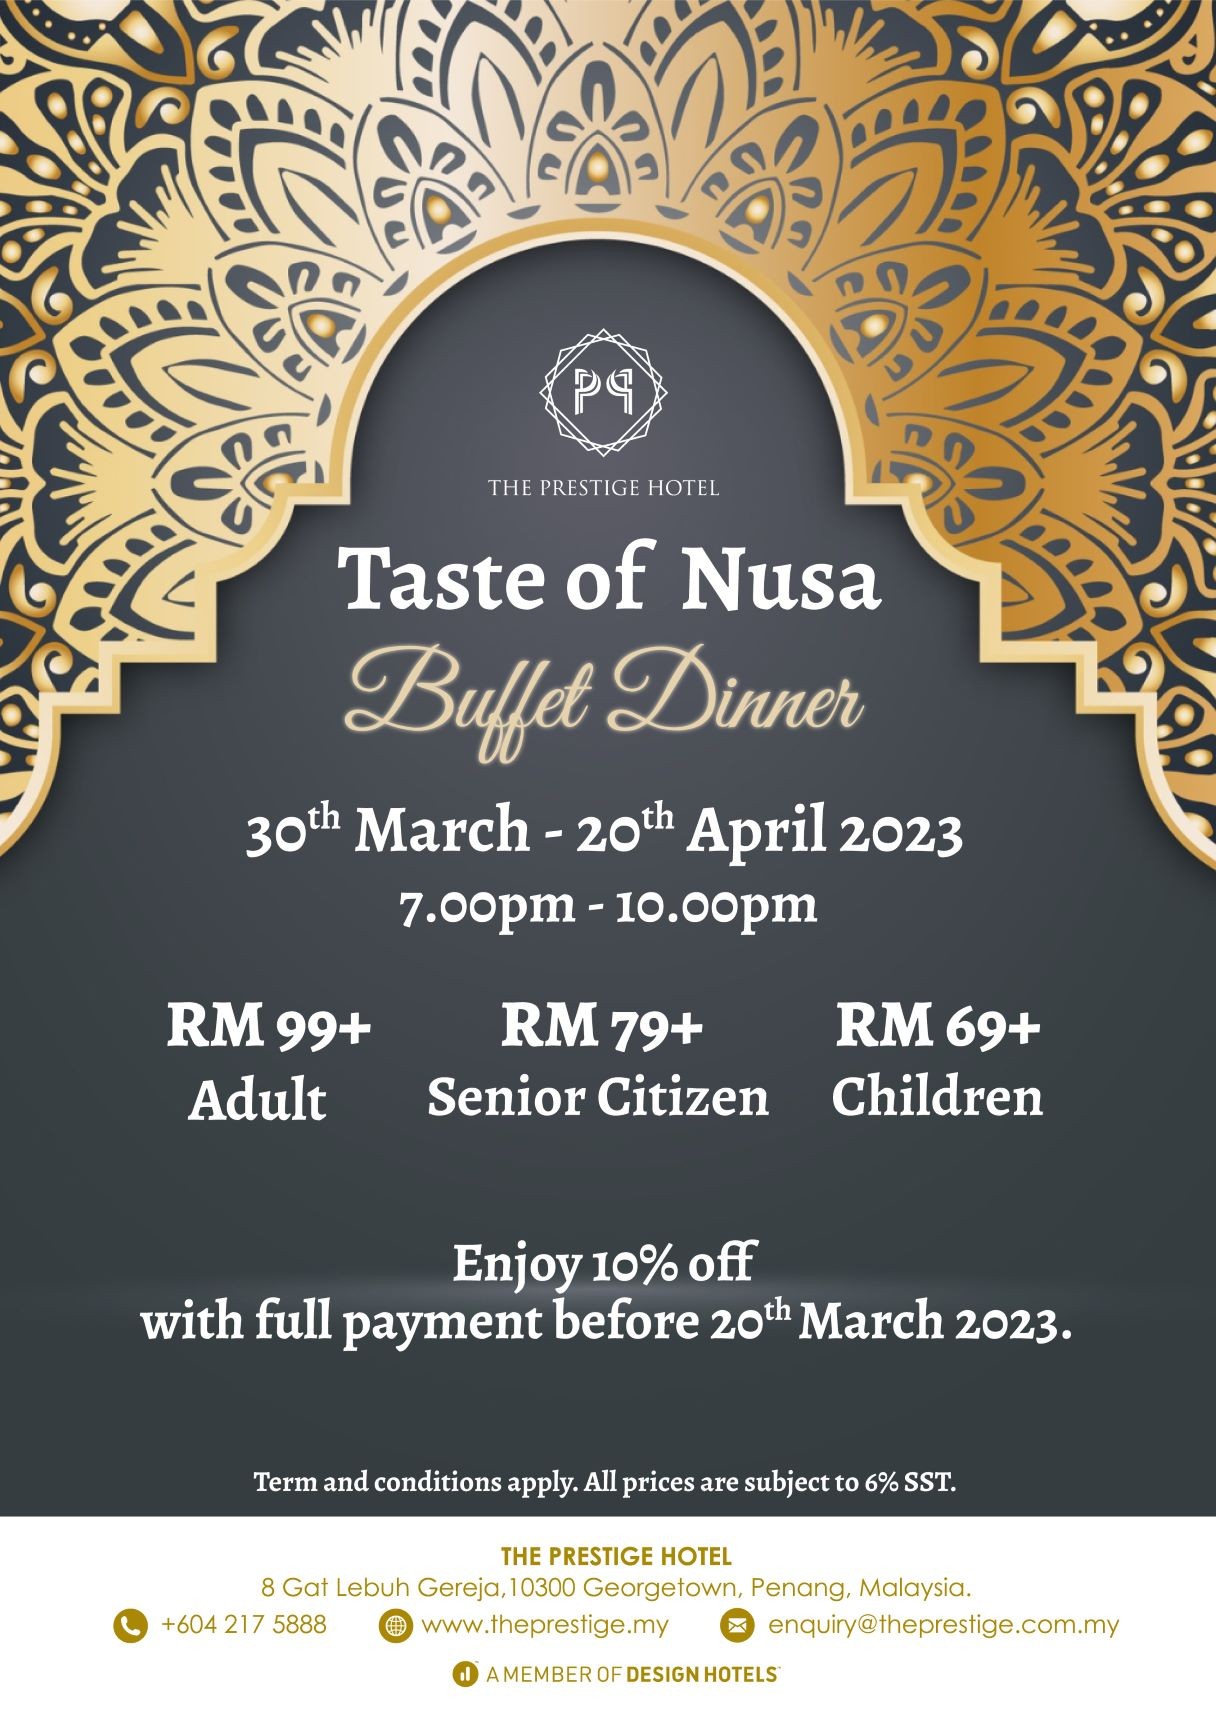 Taste of Nusa Buffet Dinner by The Prestige